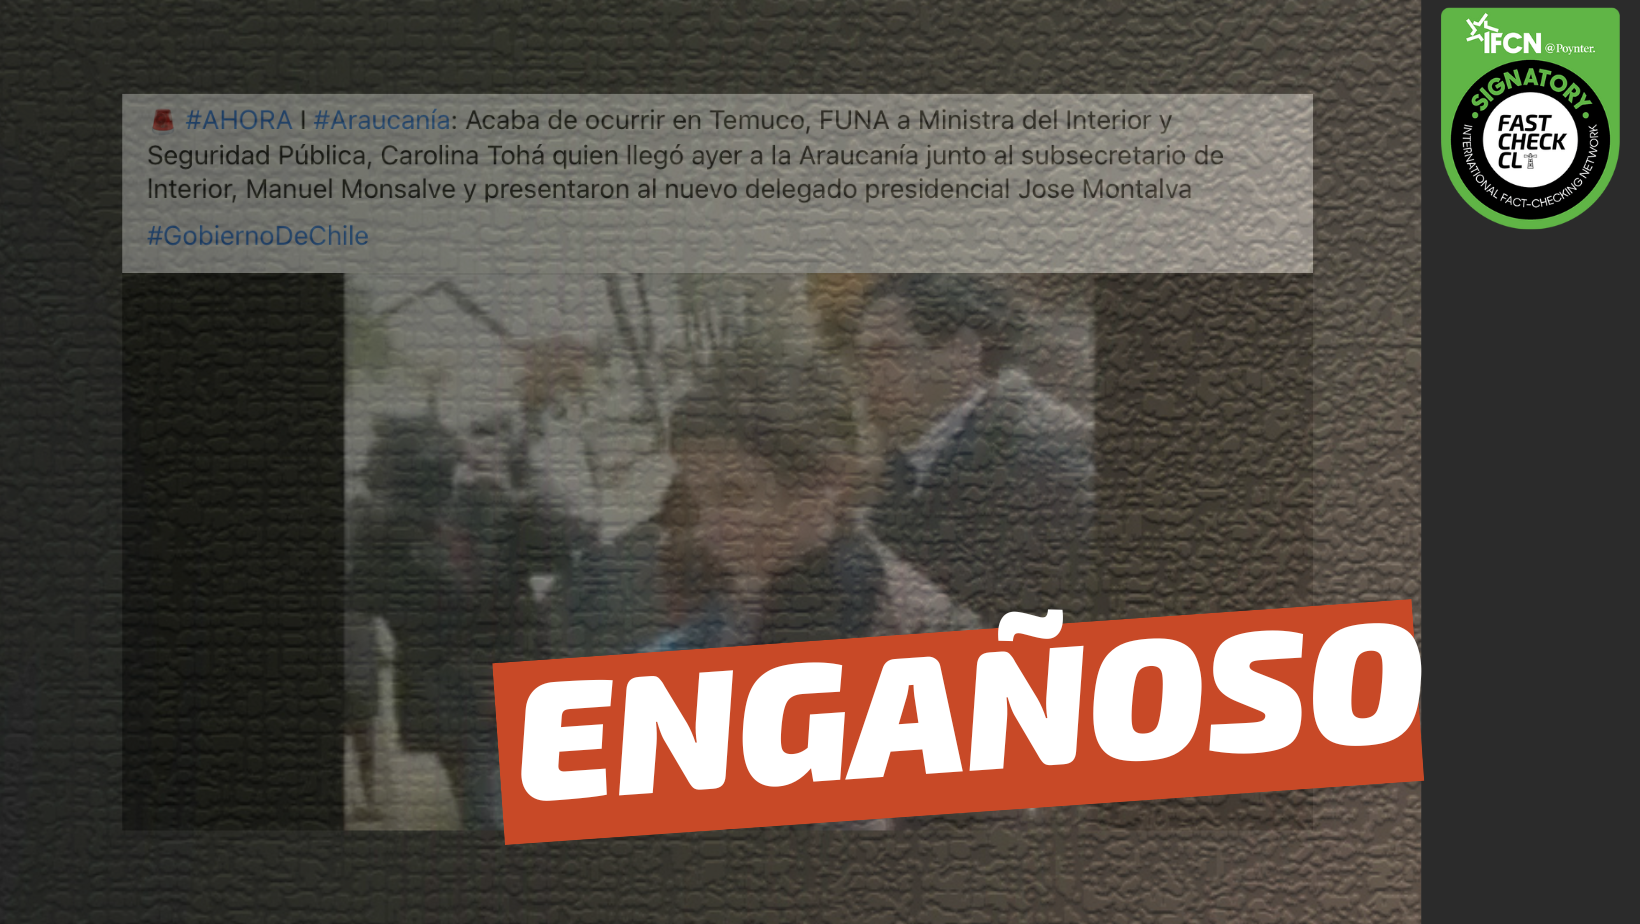 You are currently viewing (Video) “Acaba de ocurrir en Temuco, funa a Ministra del Interior, Carolina Tohá (…)”: #Engañoso